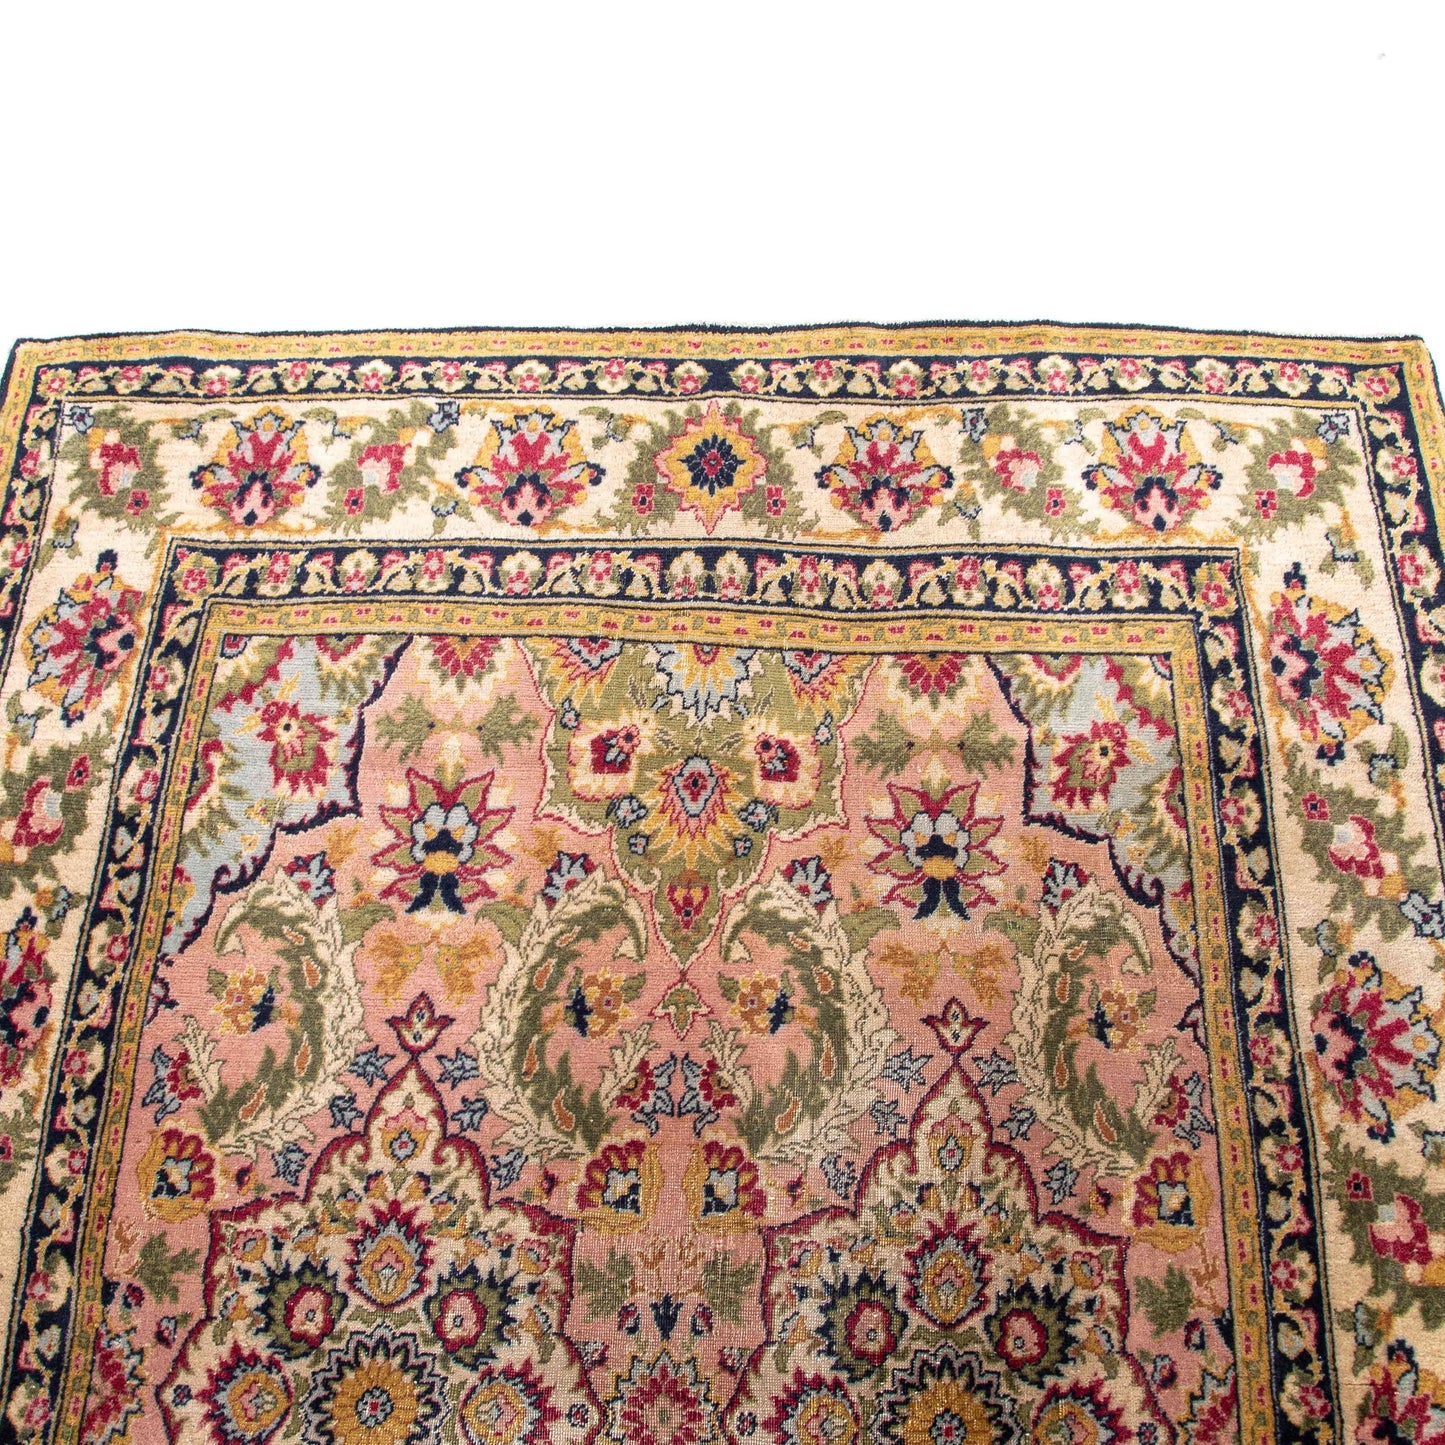 Oriental Rug Anatolian Handwoven Wool On Wool 126 x 182 Cm - 4' 2'' x 6' Pink C004 ER01